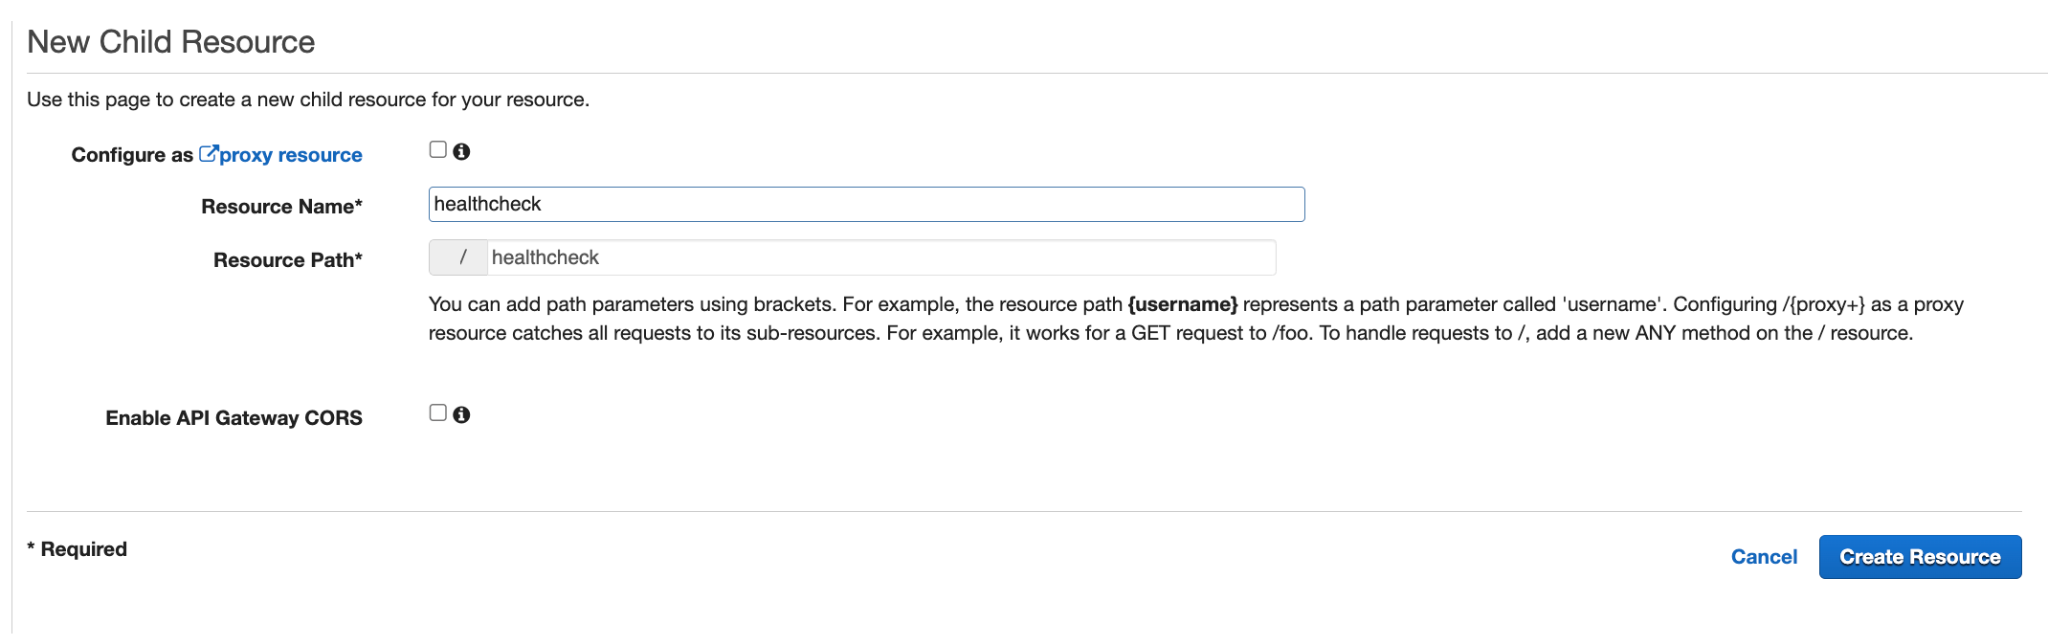 AWS API Gateway Setup: Go to API, create resource named healthcheck with path /healthcheck.